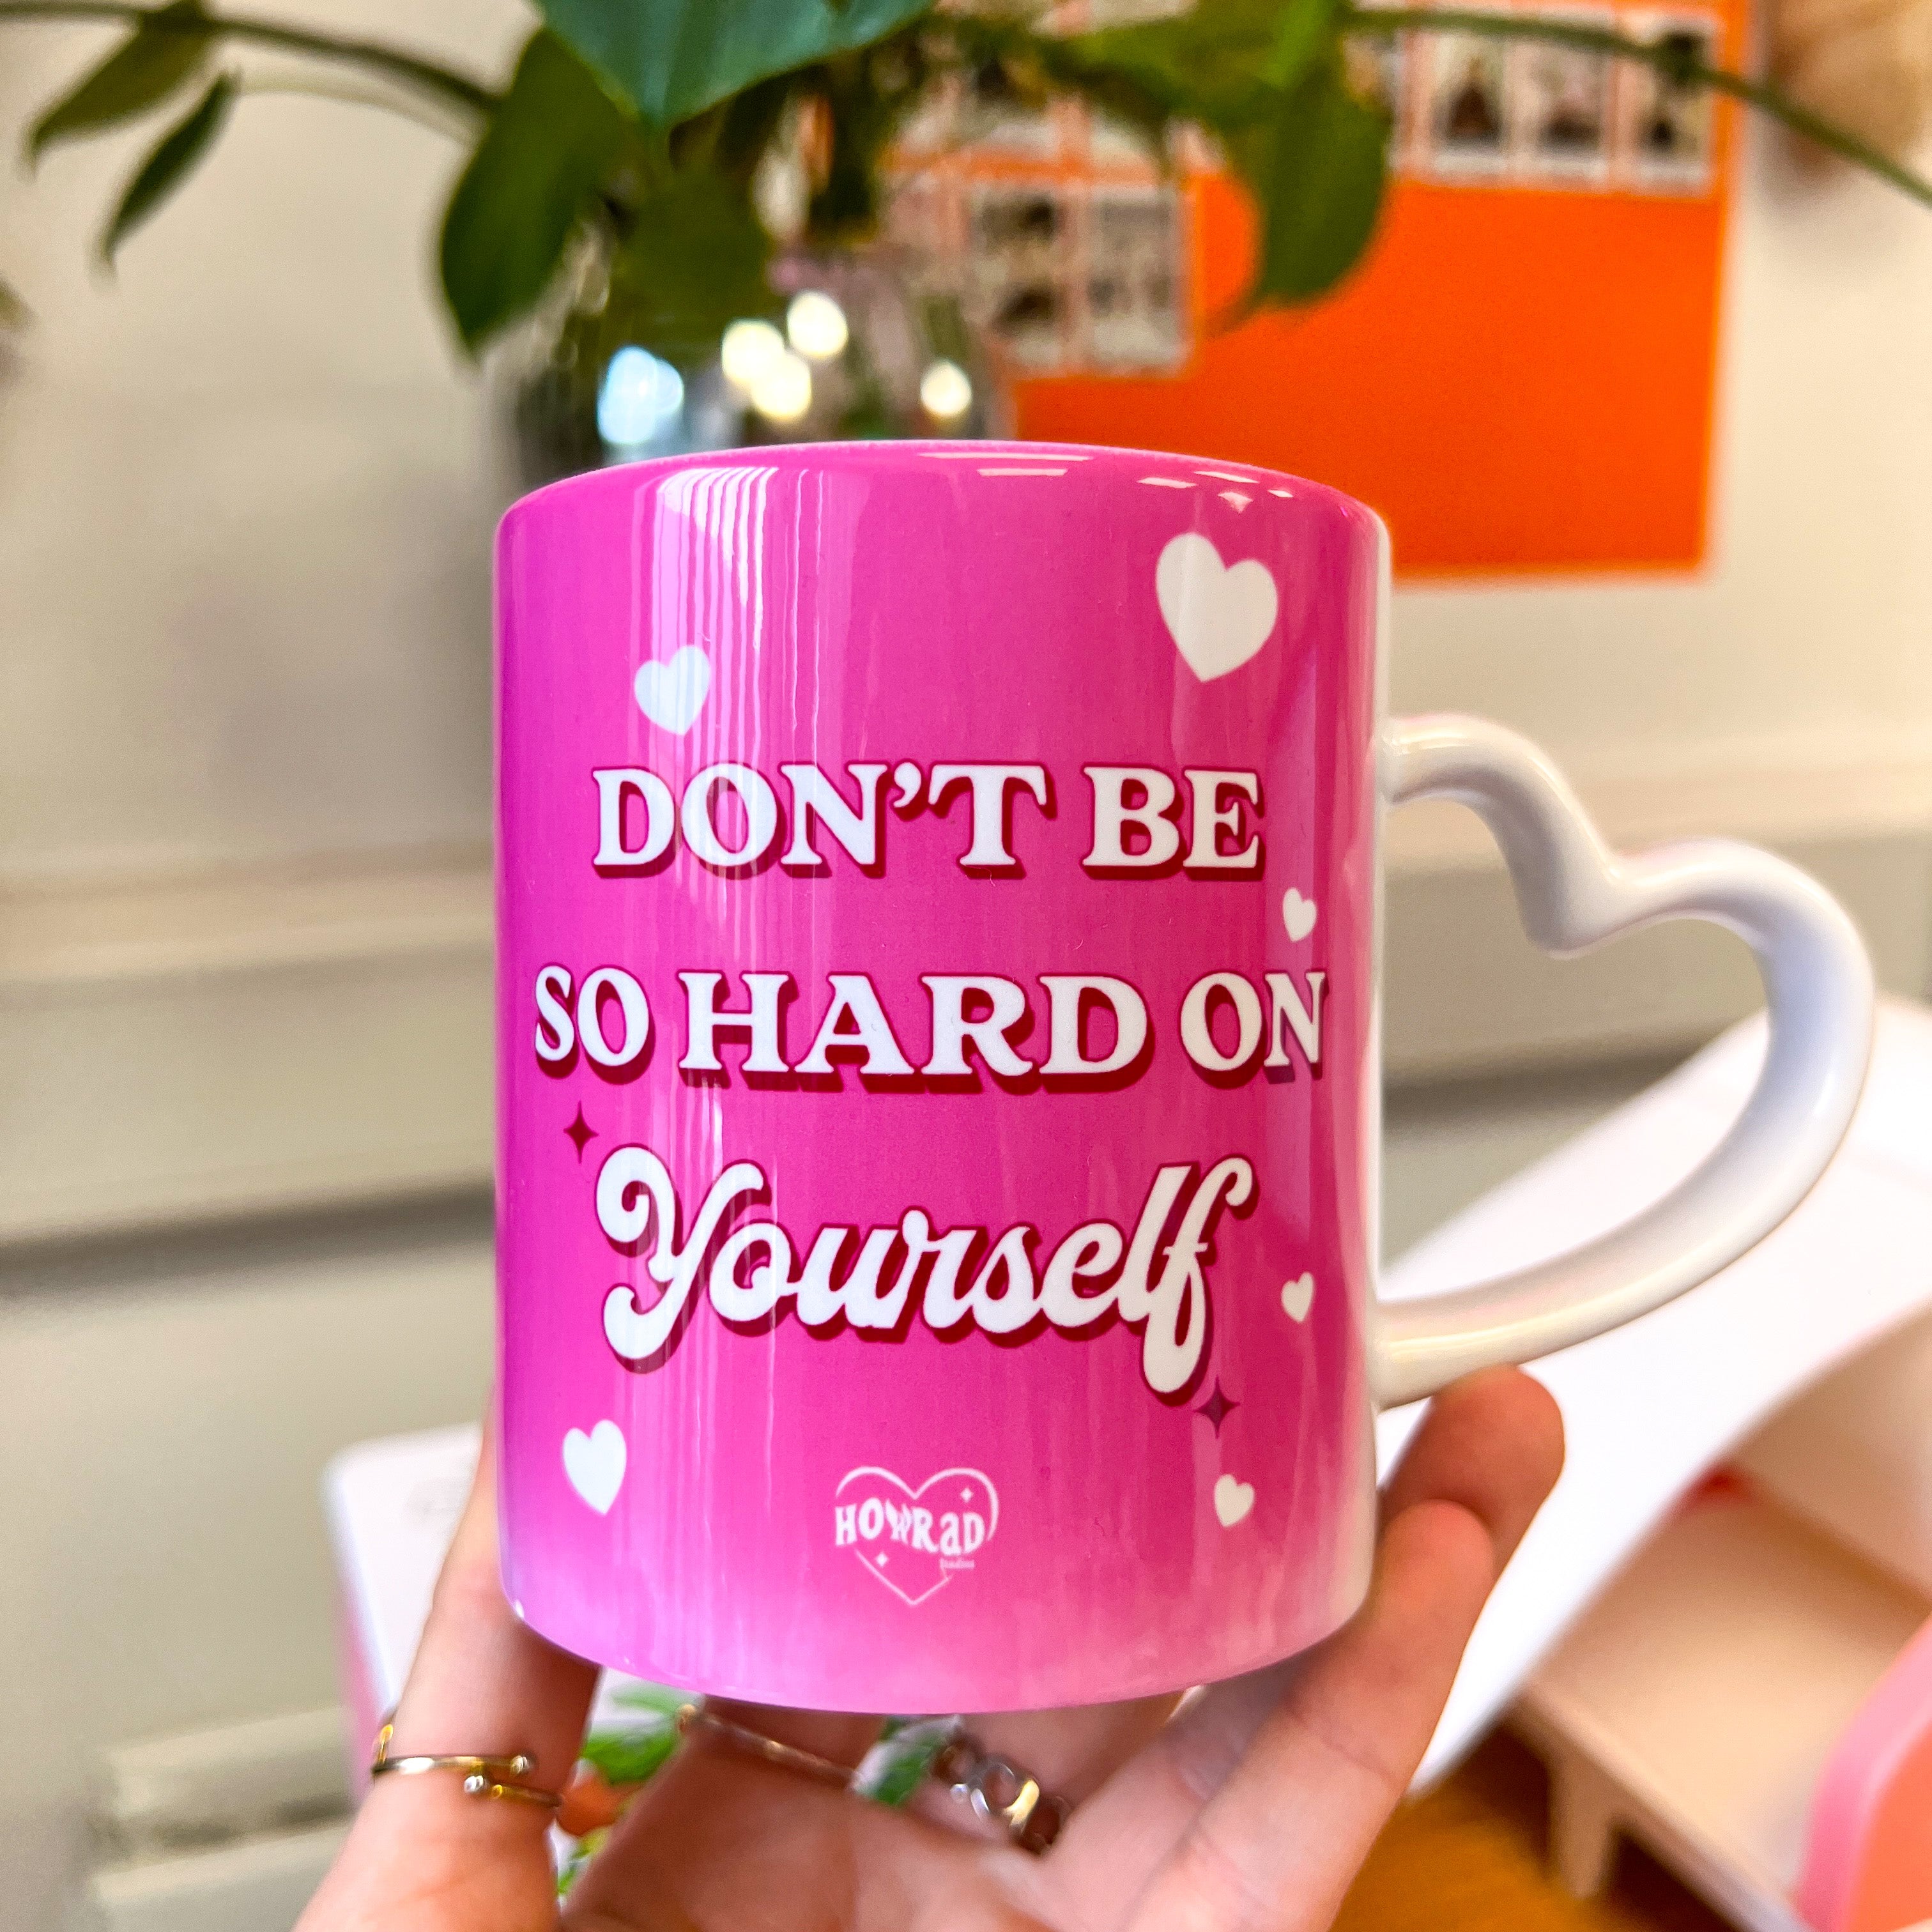 Don't be so hard on yourself faulty mug